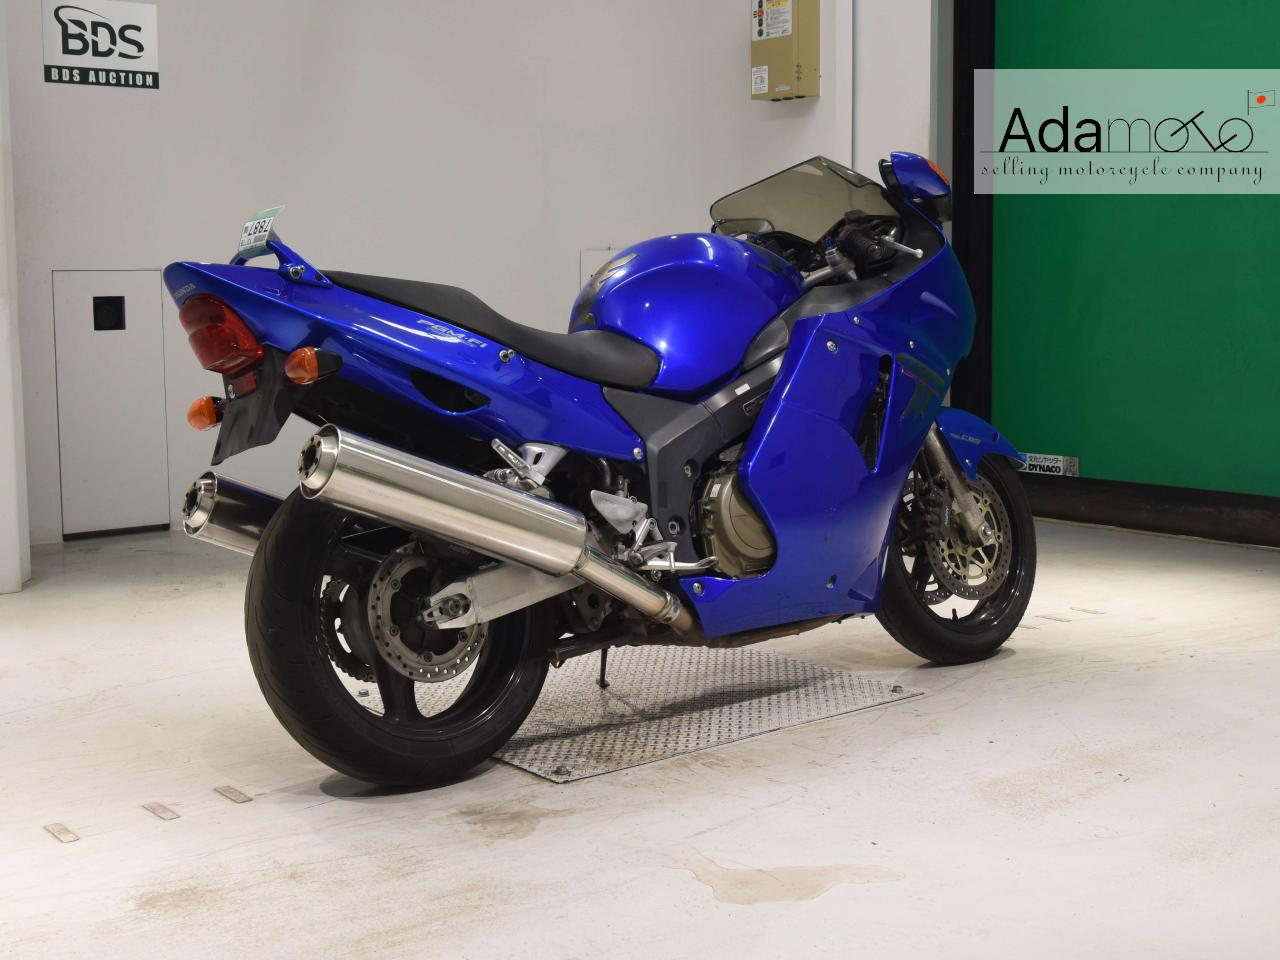 Honda CBR1100XX - Adamoto - Motorcycles from Japan